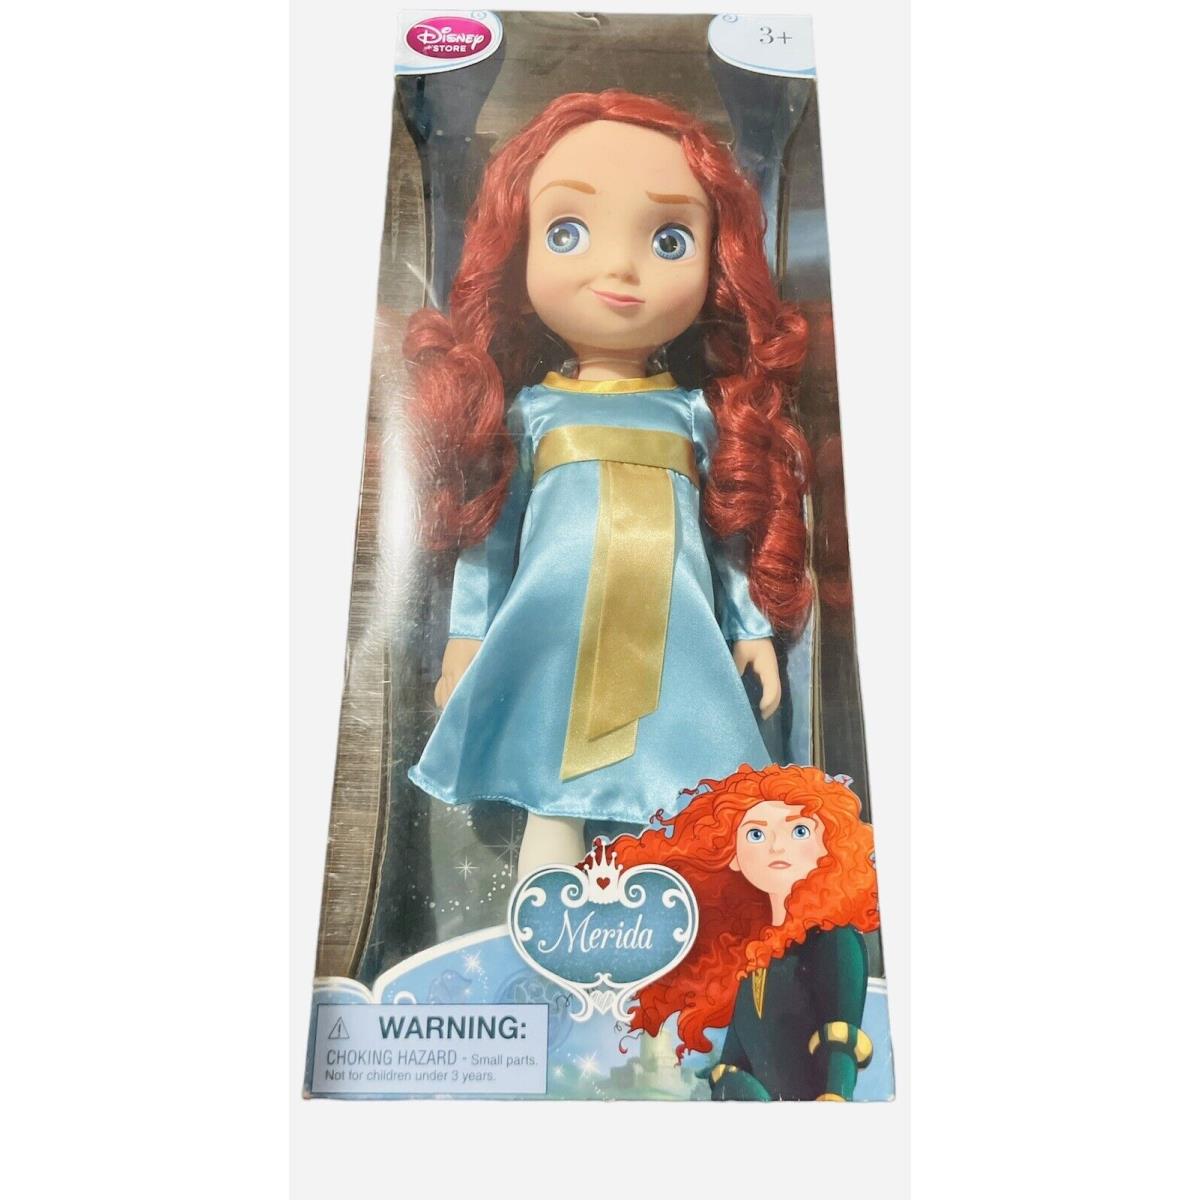 Disney Store Disney Princess Brave 16 Merida Toddler Doll Age 3 + Collectible